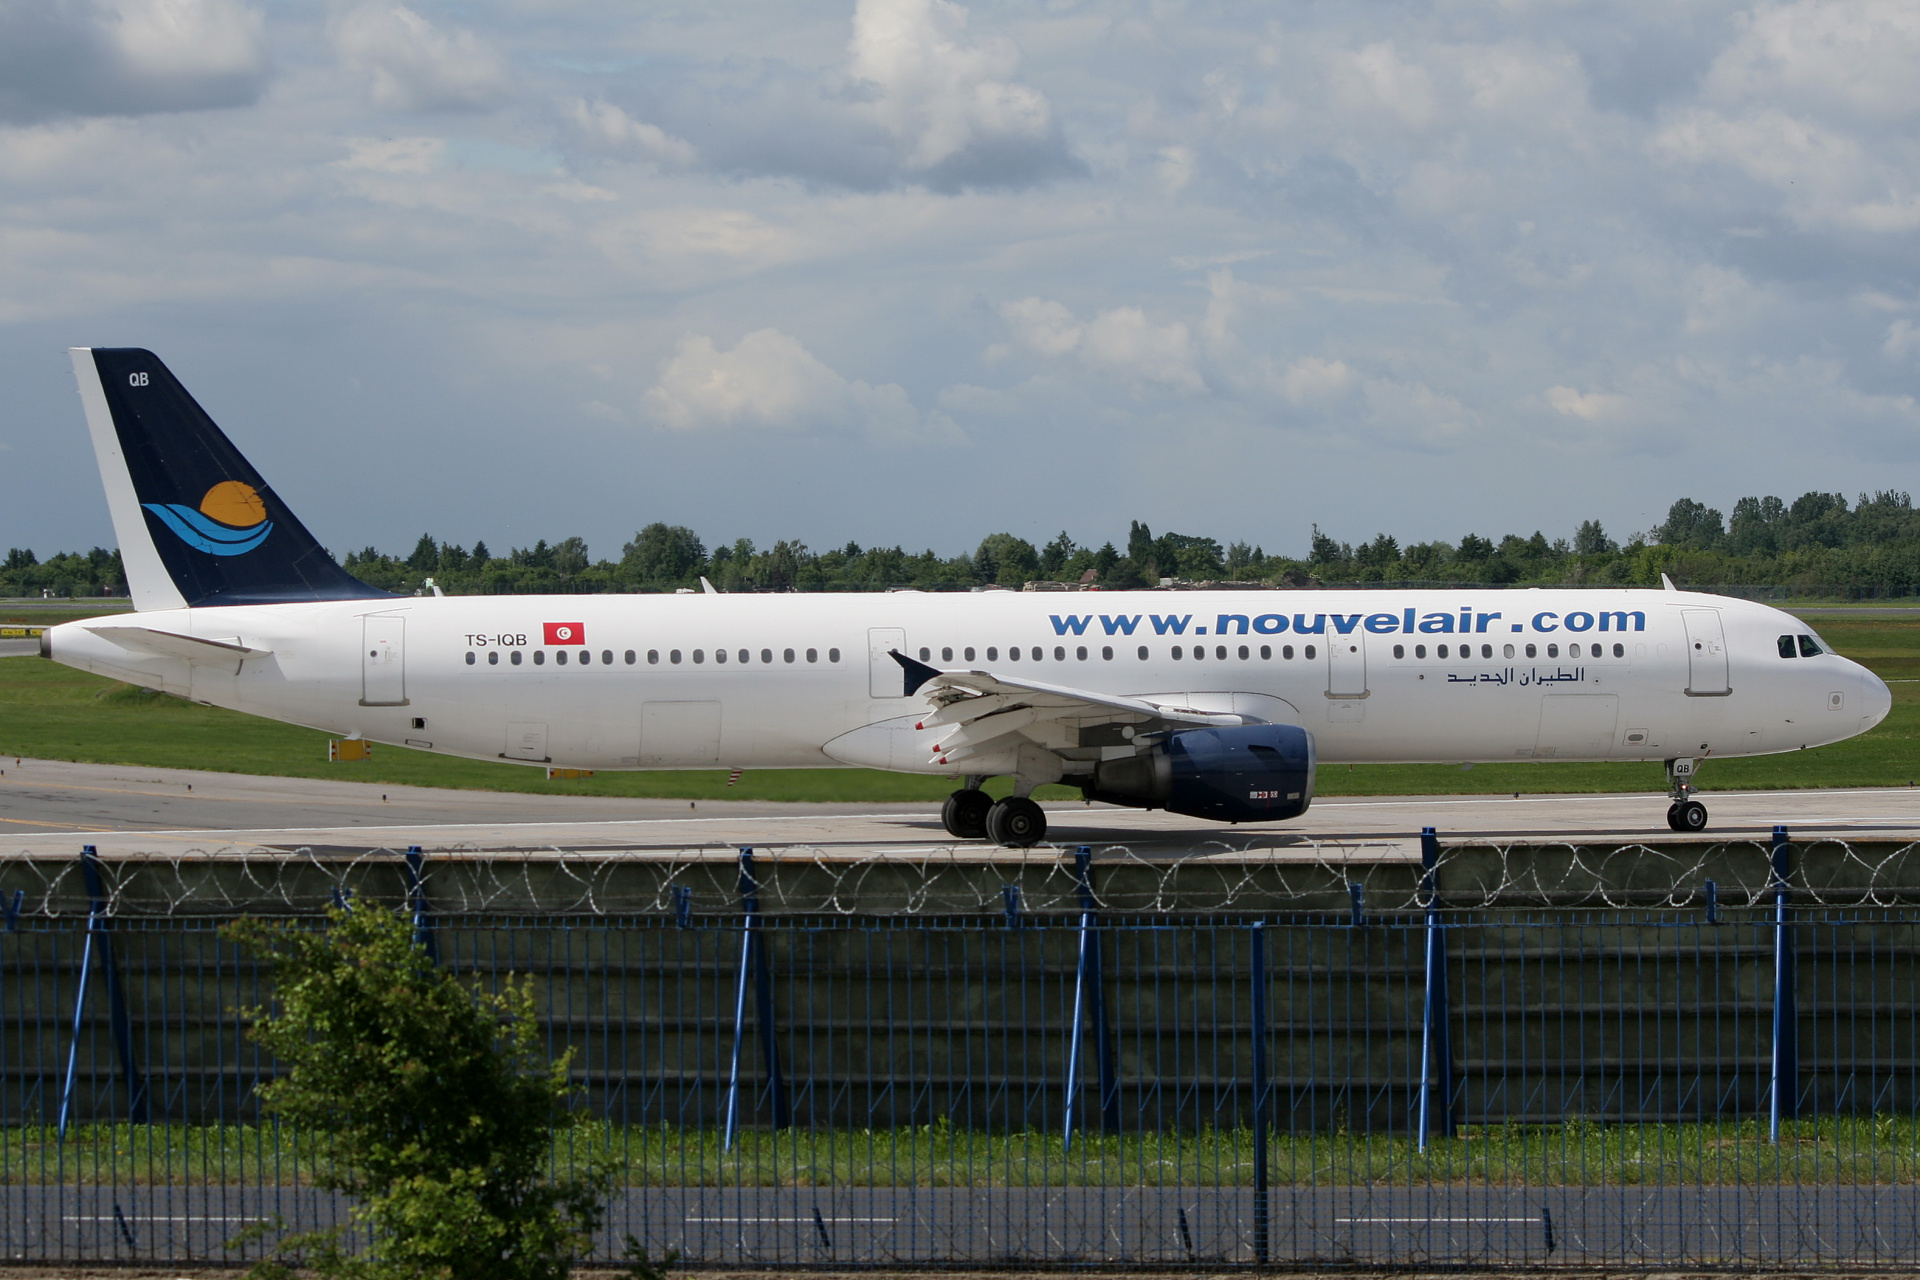 TS-IQB, Nouvelair (Samoloty » Spotting na EPWA » Airbus A321-200)